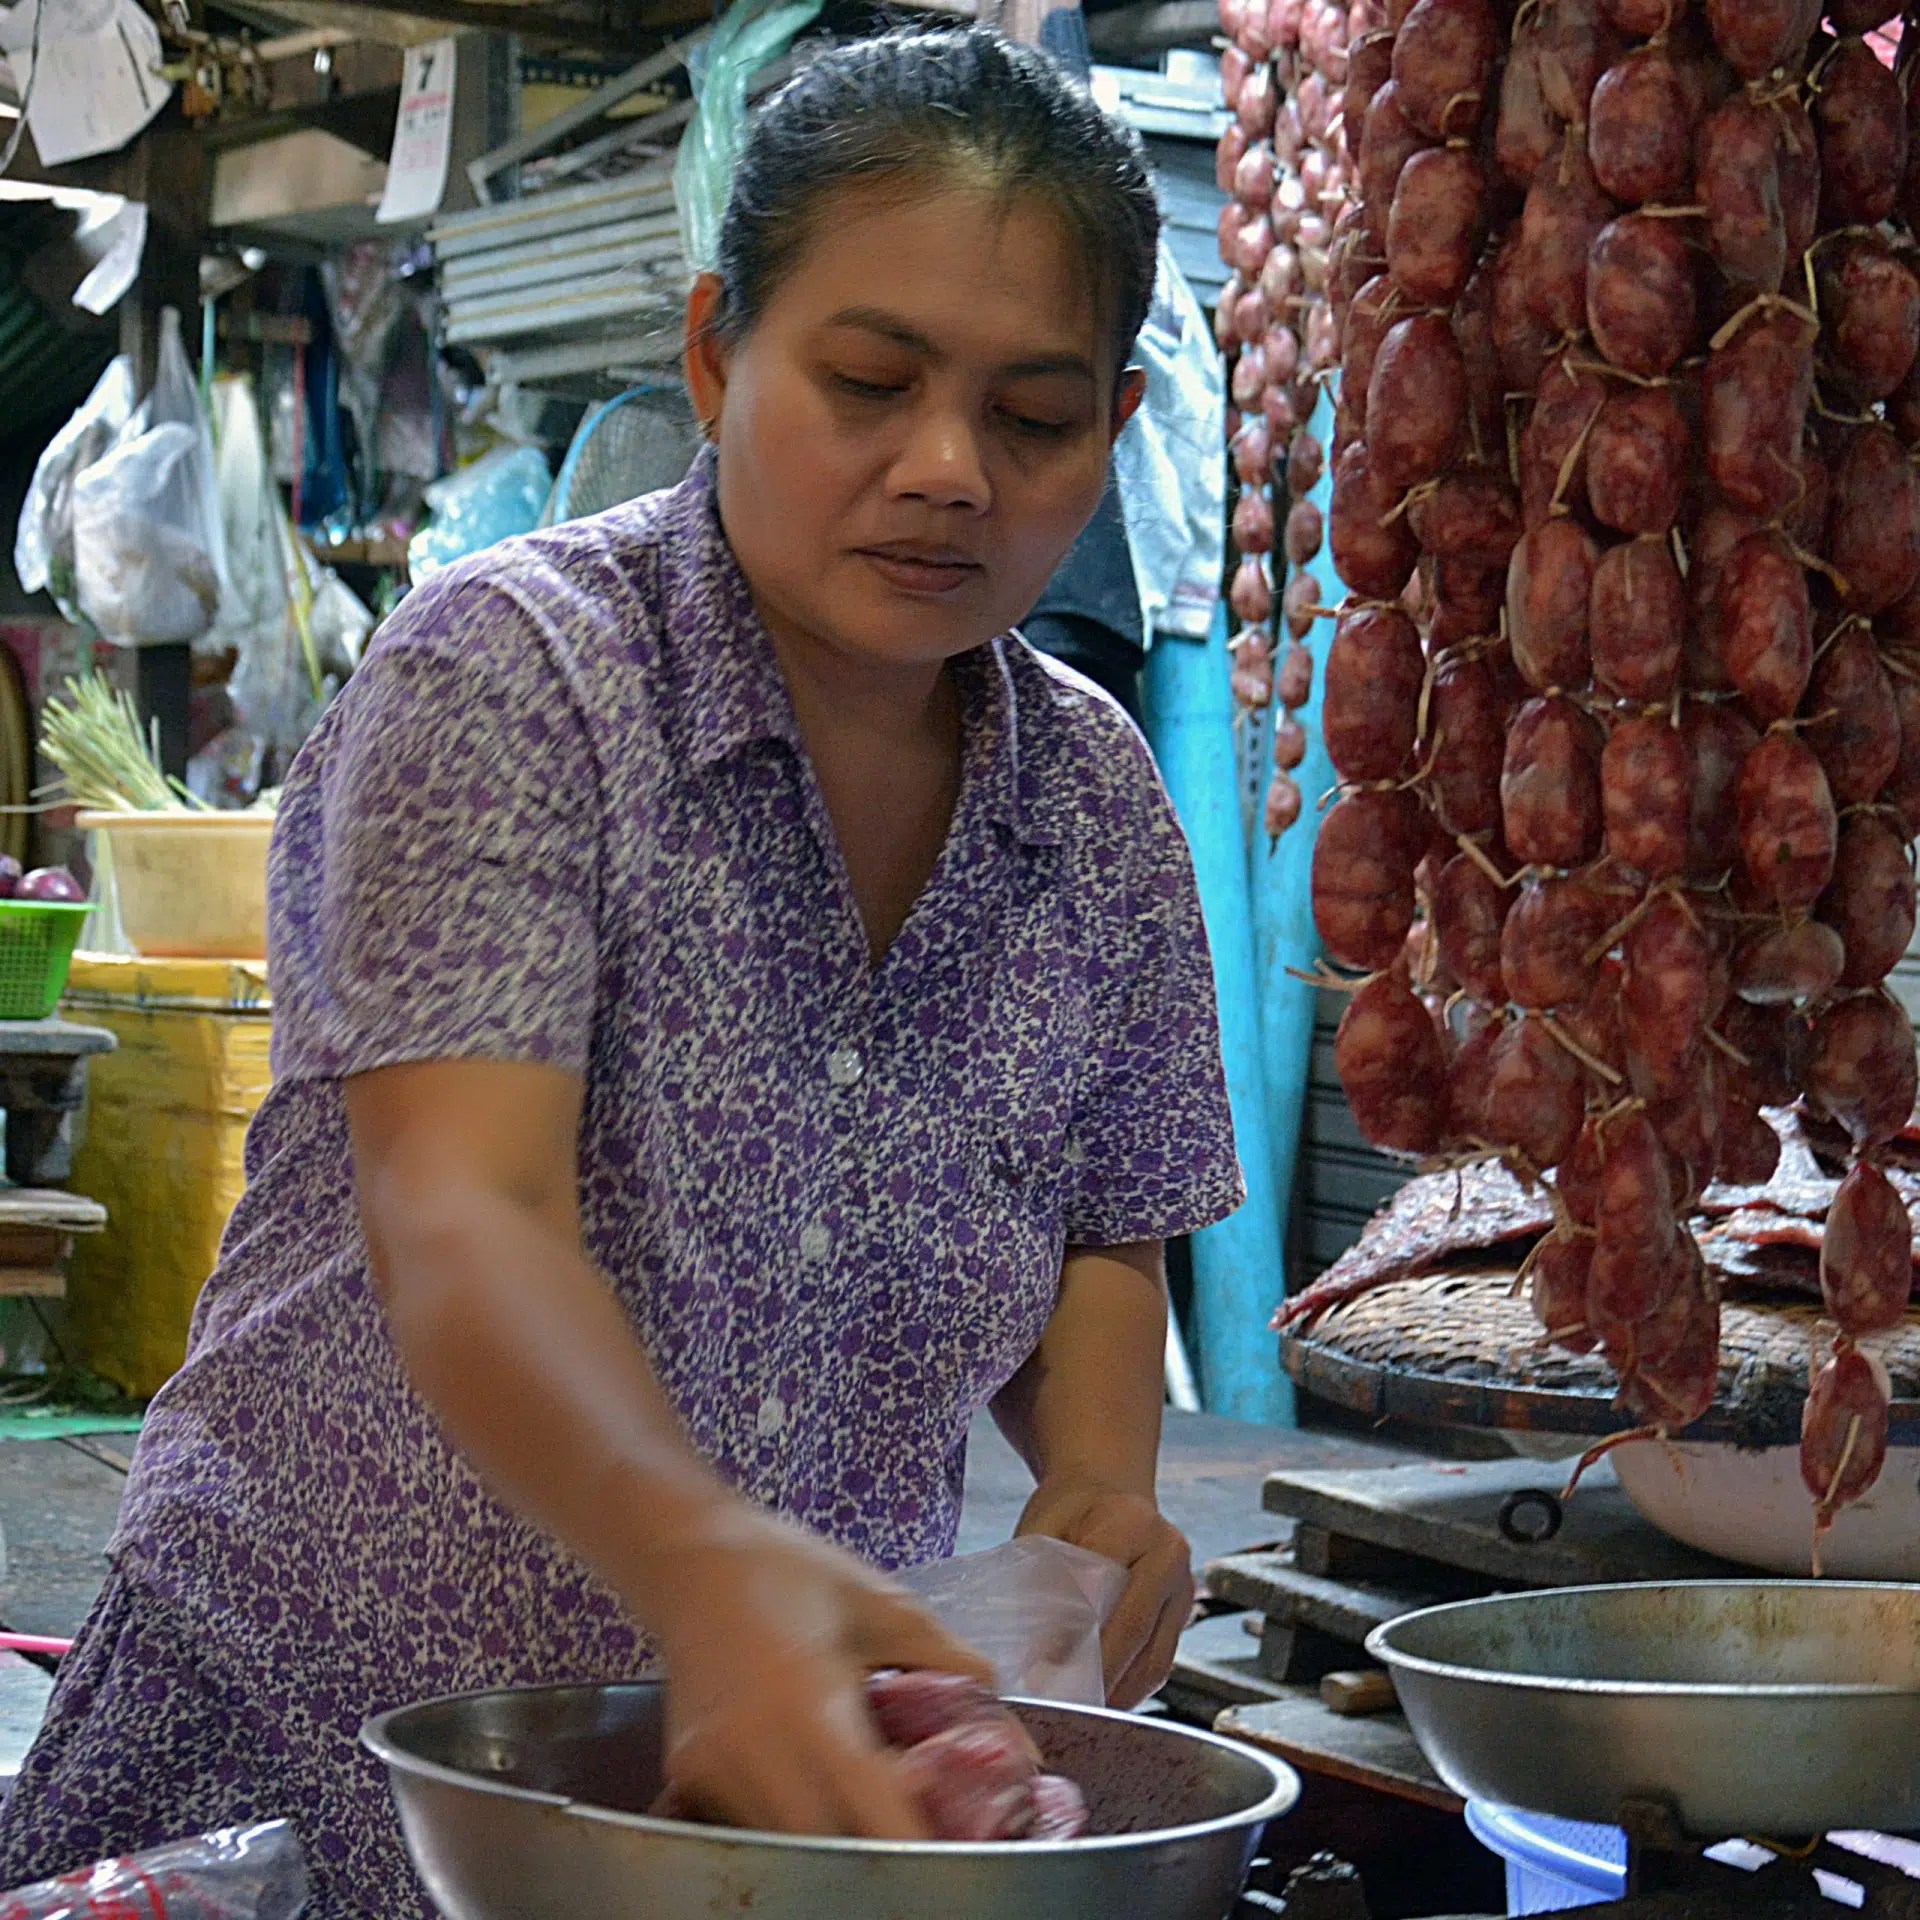 A woman preparing meat